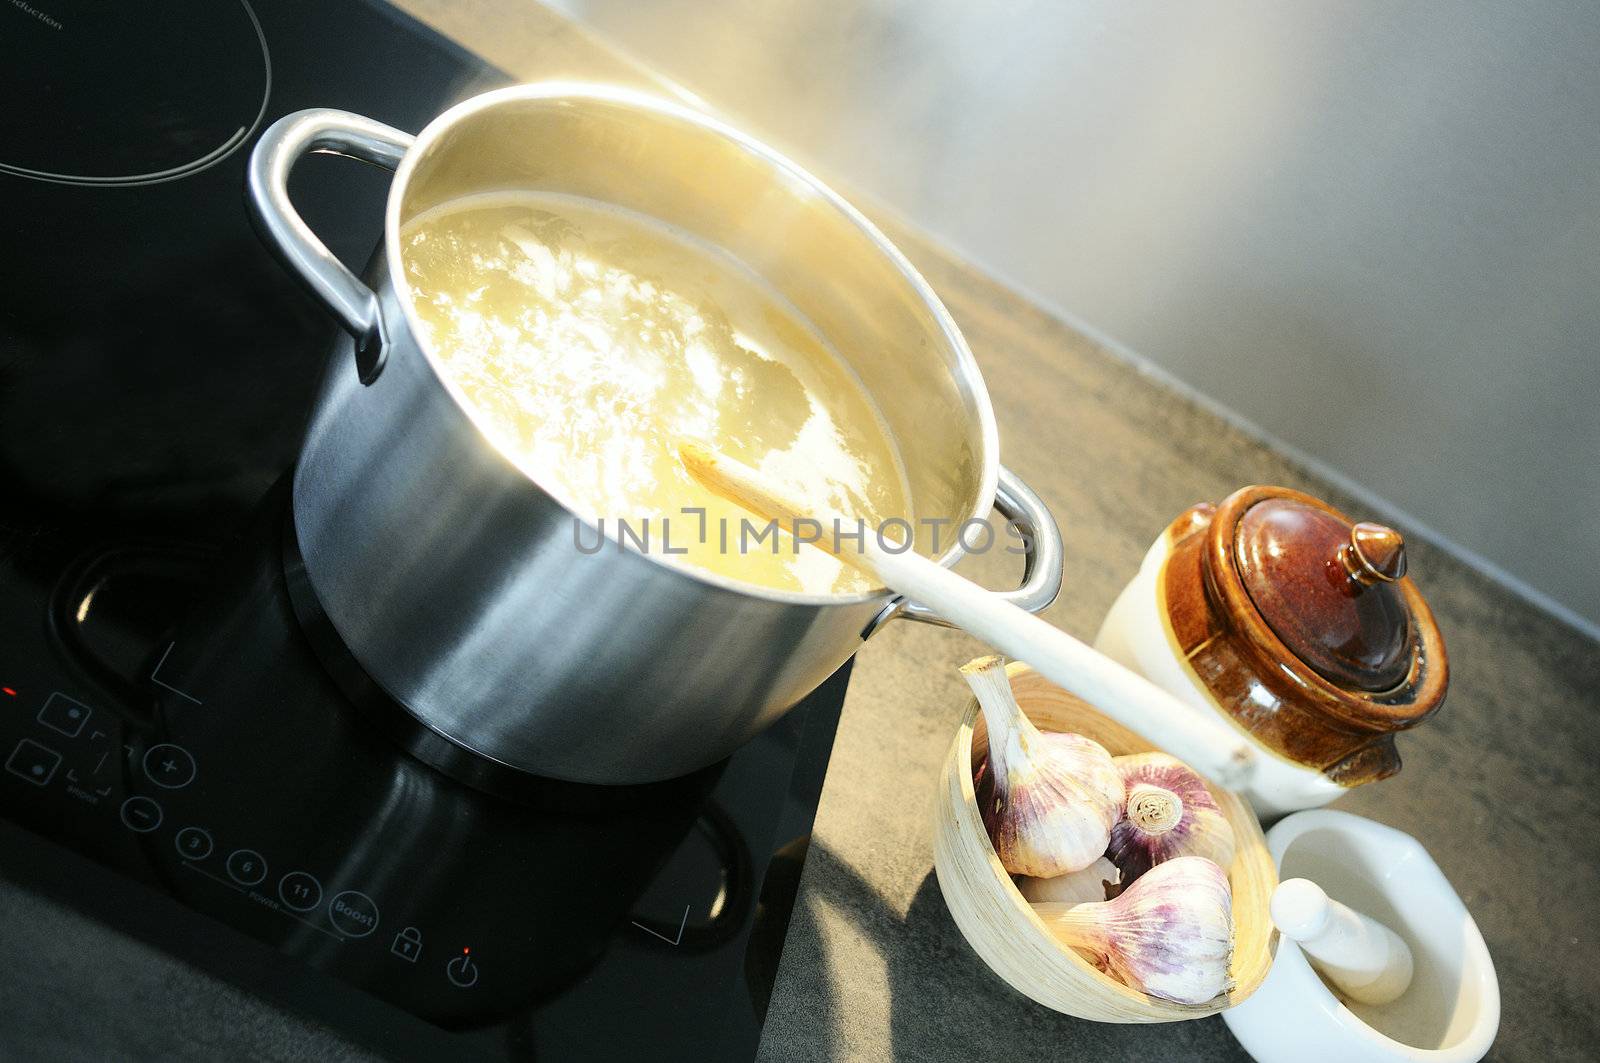 development of a recipe in a saucepan on the fire